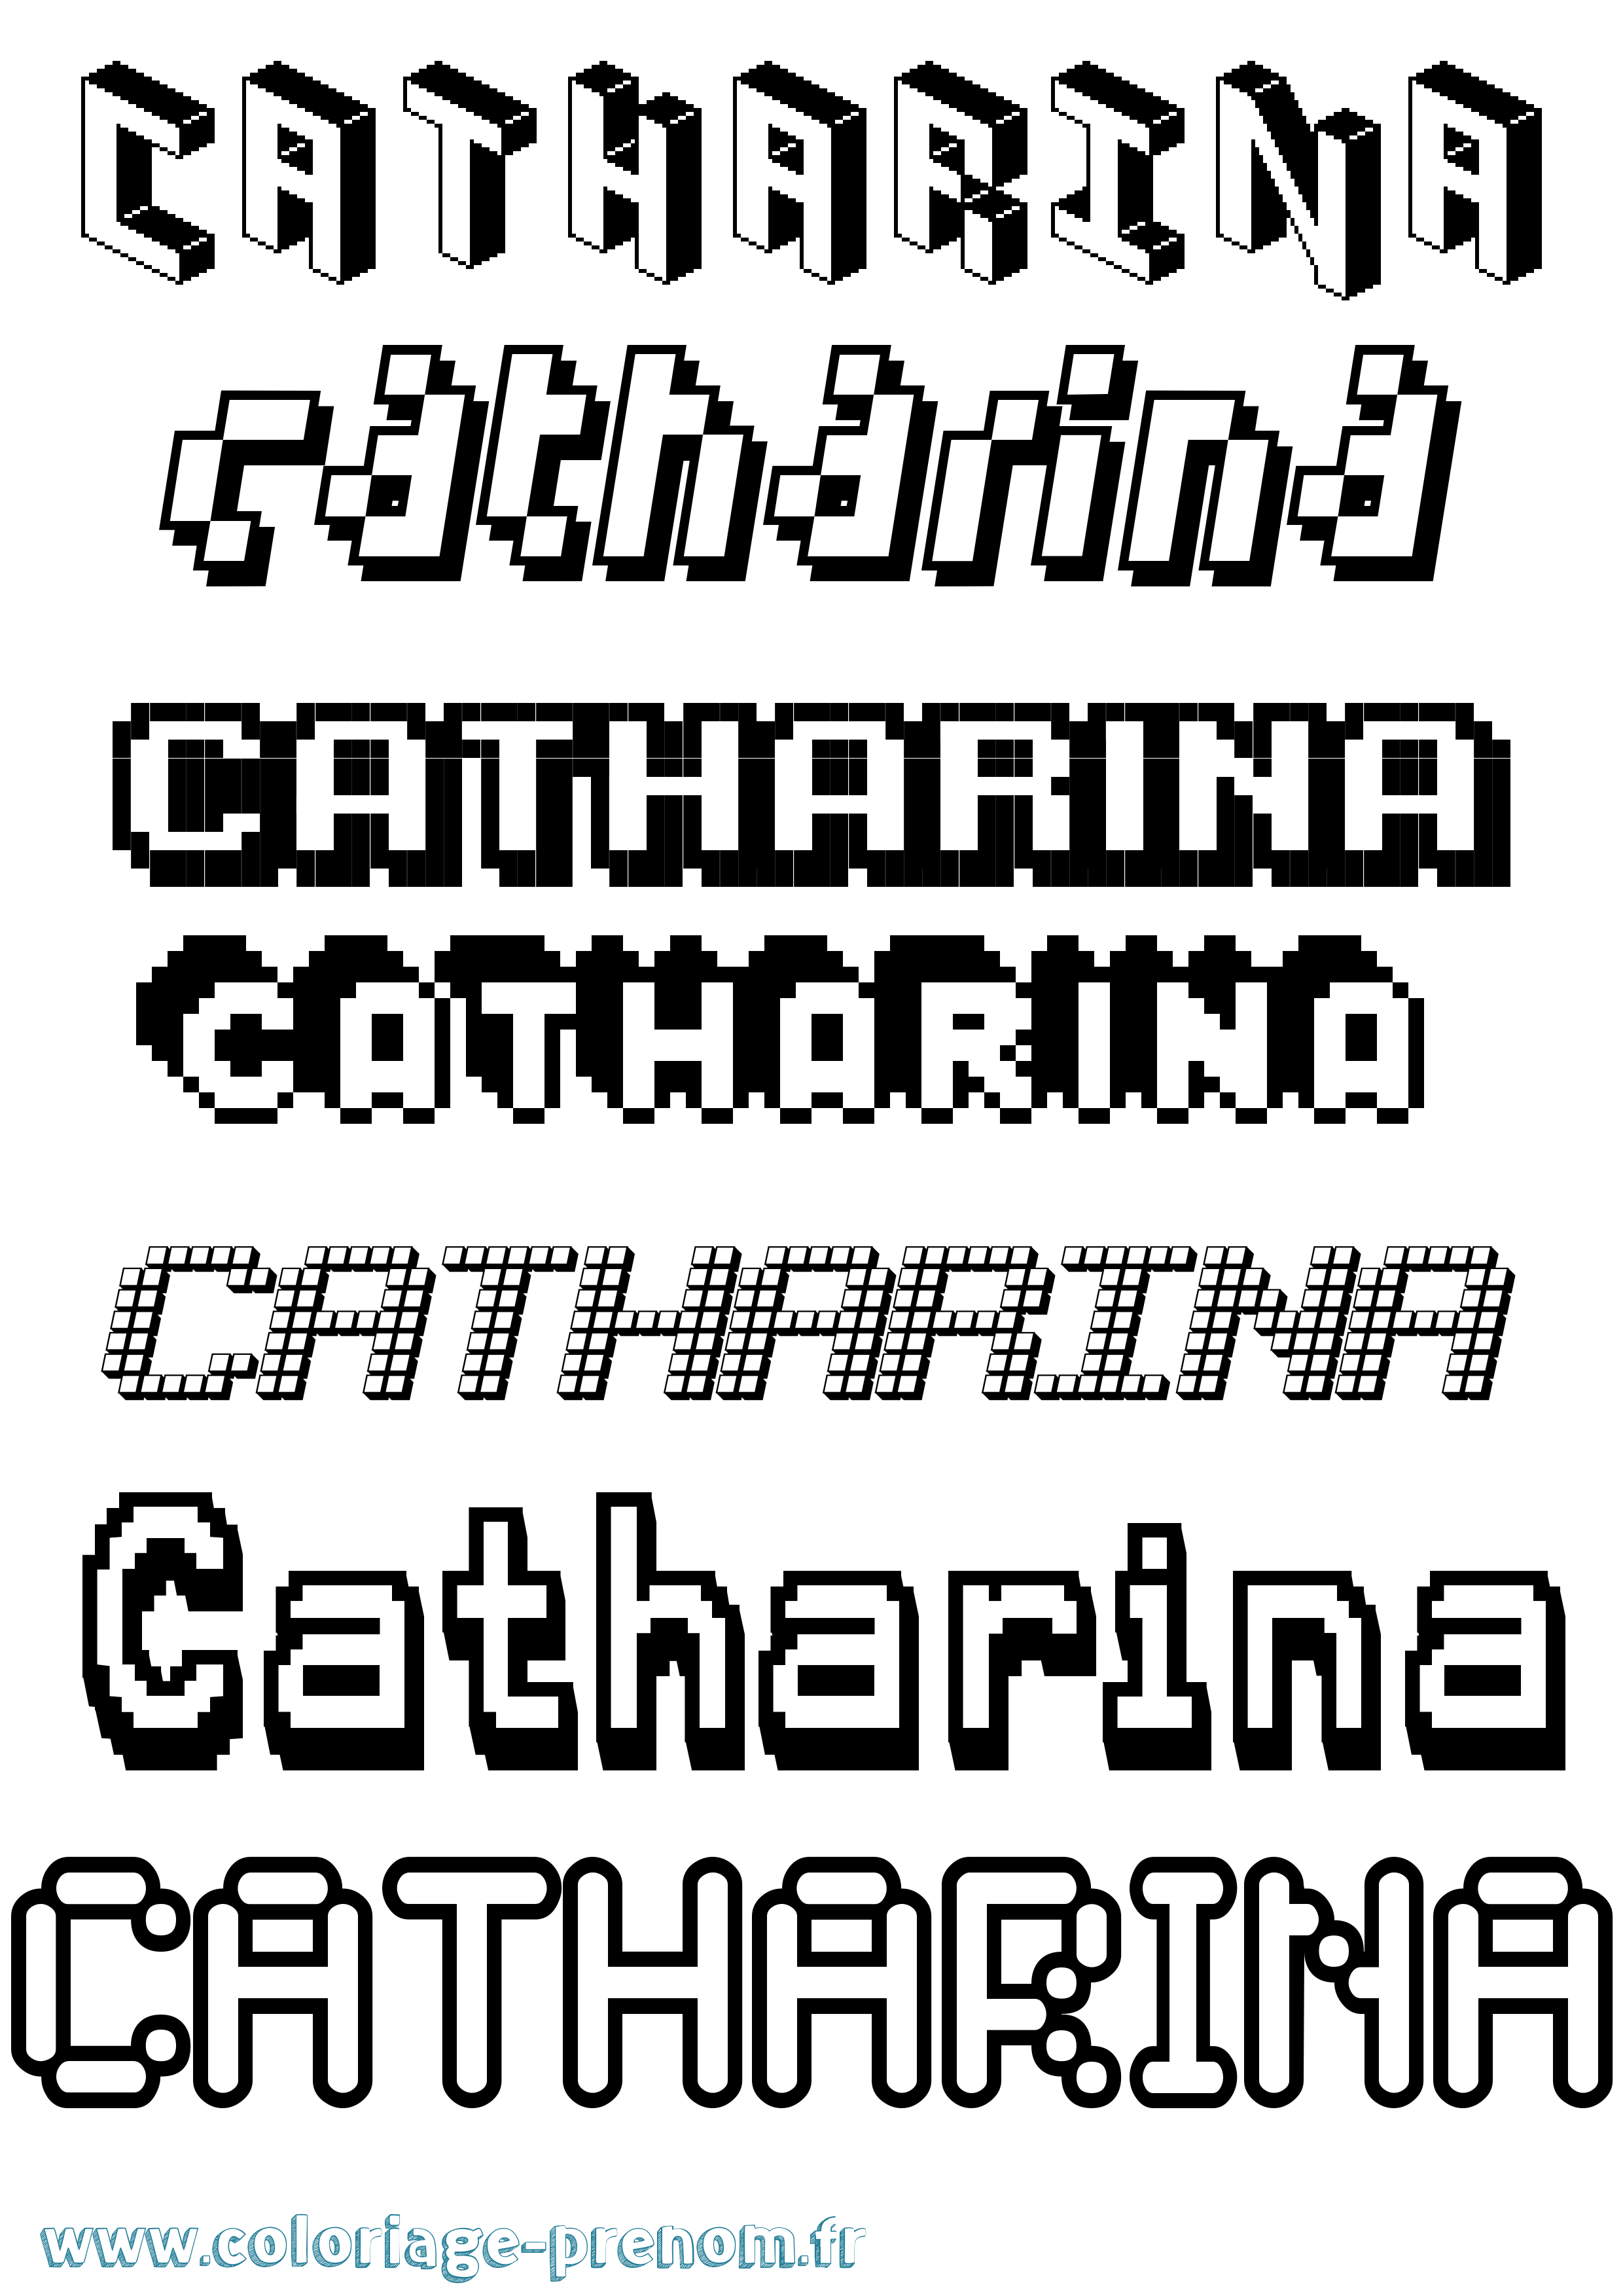 Coloriage prénom Catharina Pixel